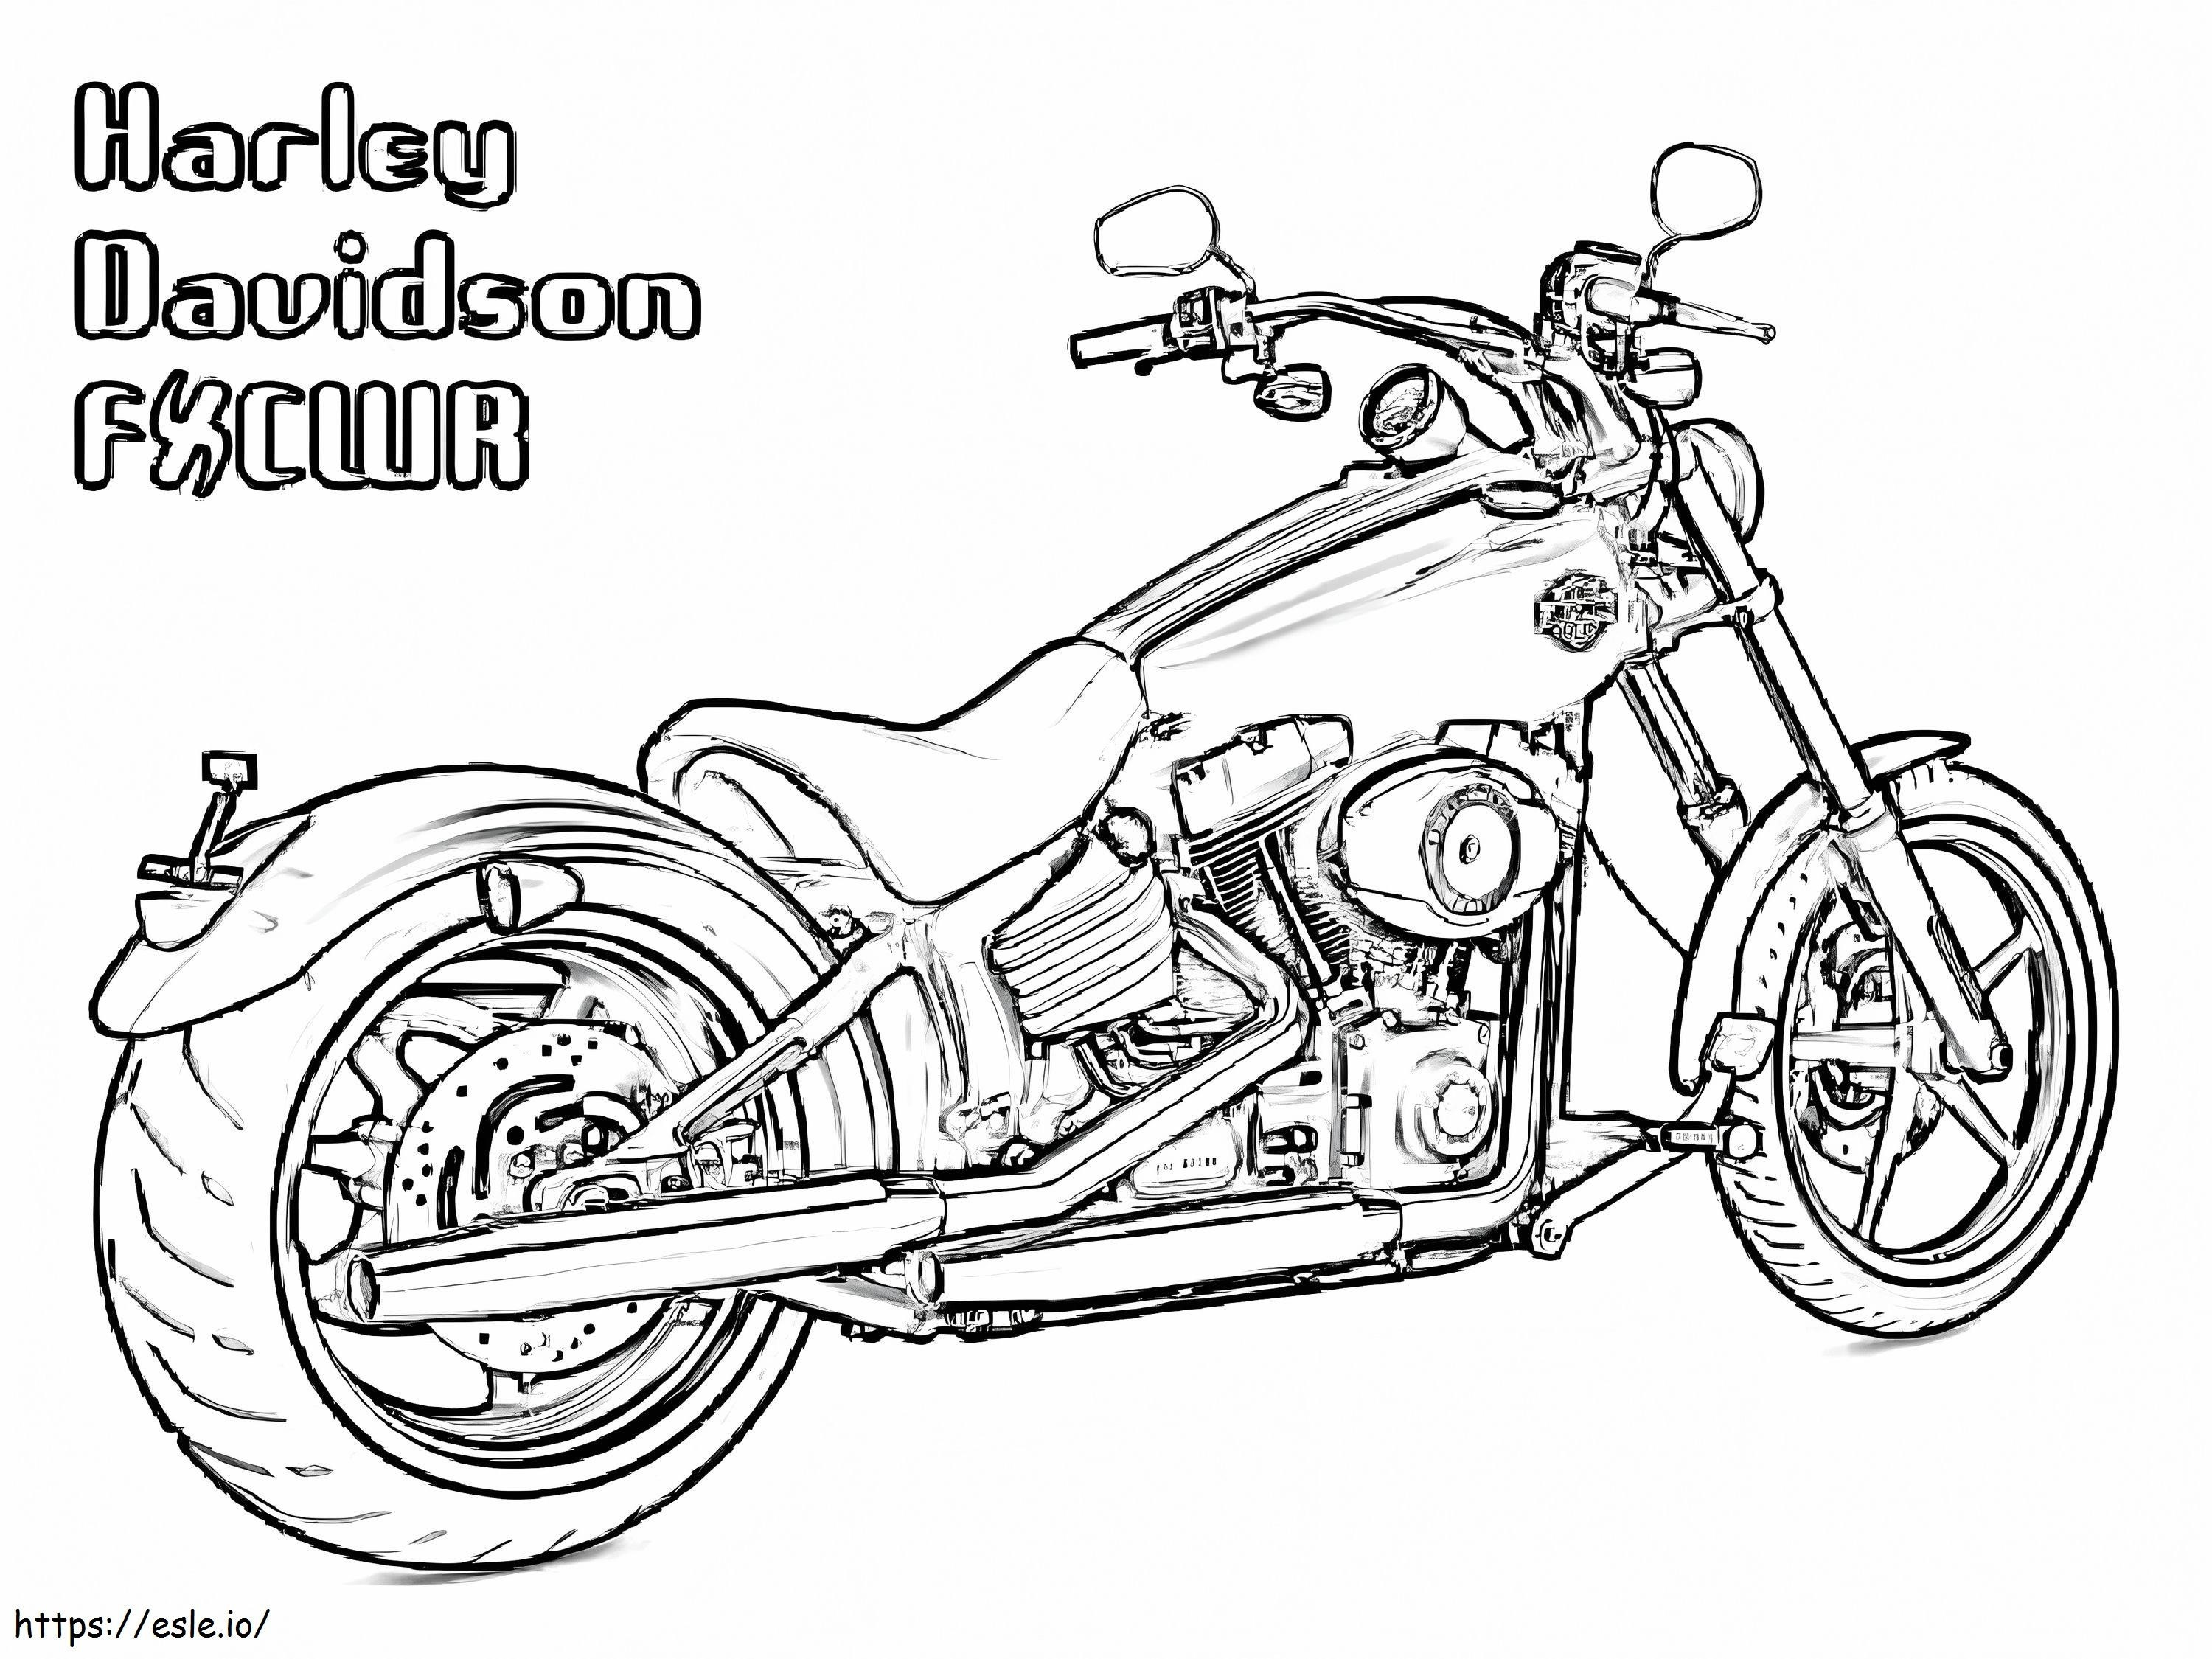 Harley Davidson eliberat de colorat